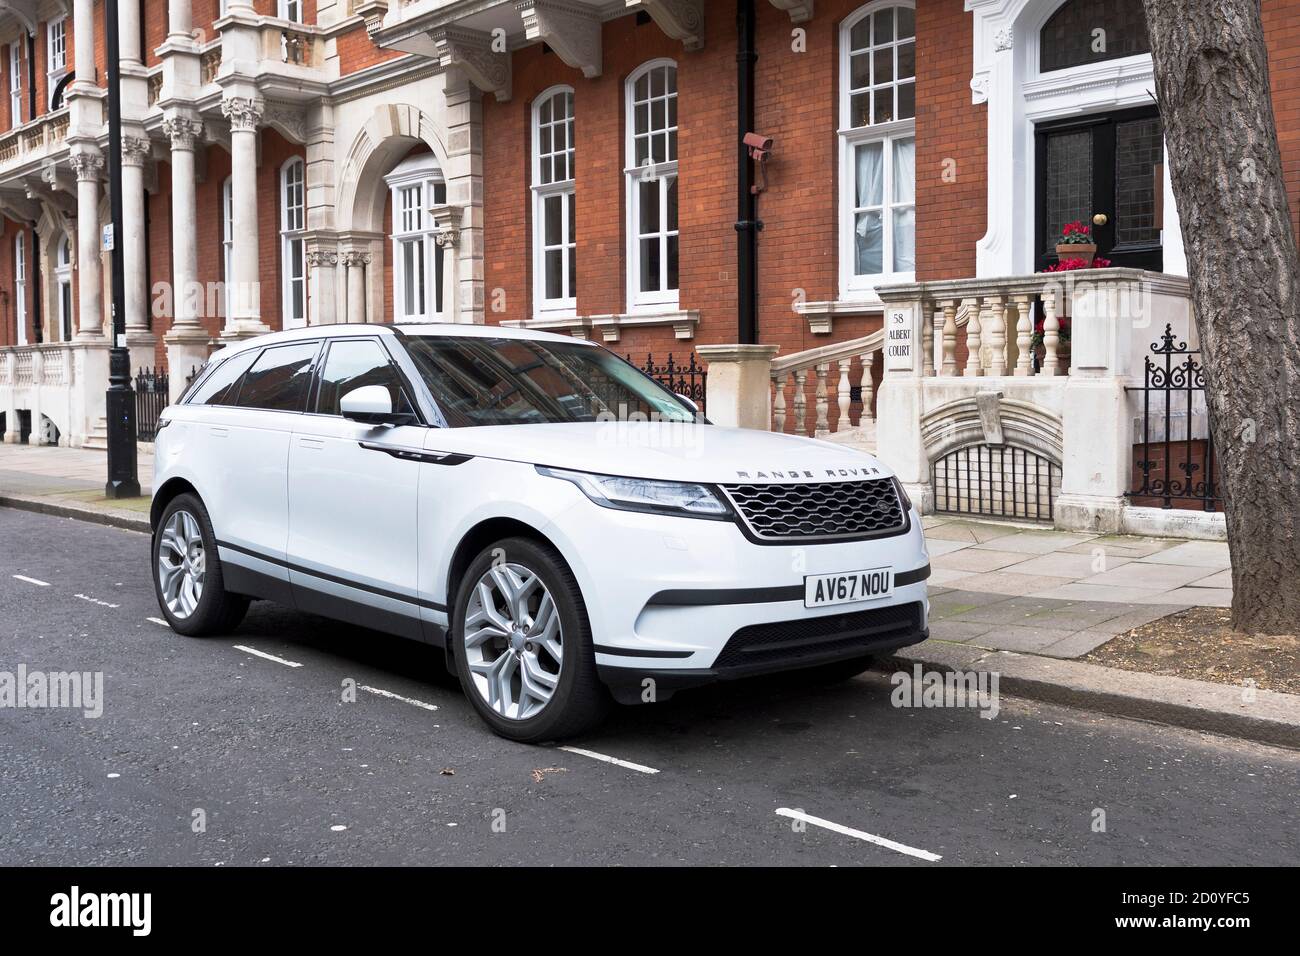 dh Range Rover Velar MOTORS UK White Car parked london england cars Stock Photo